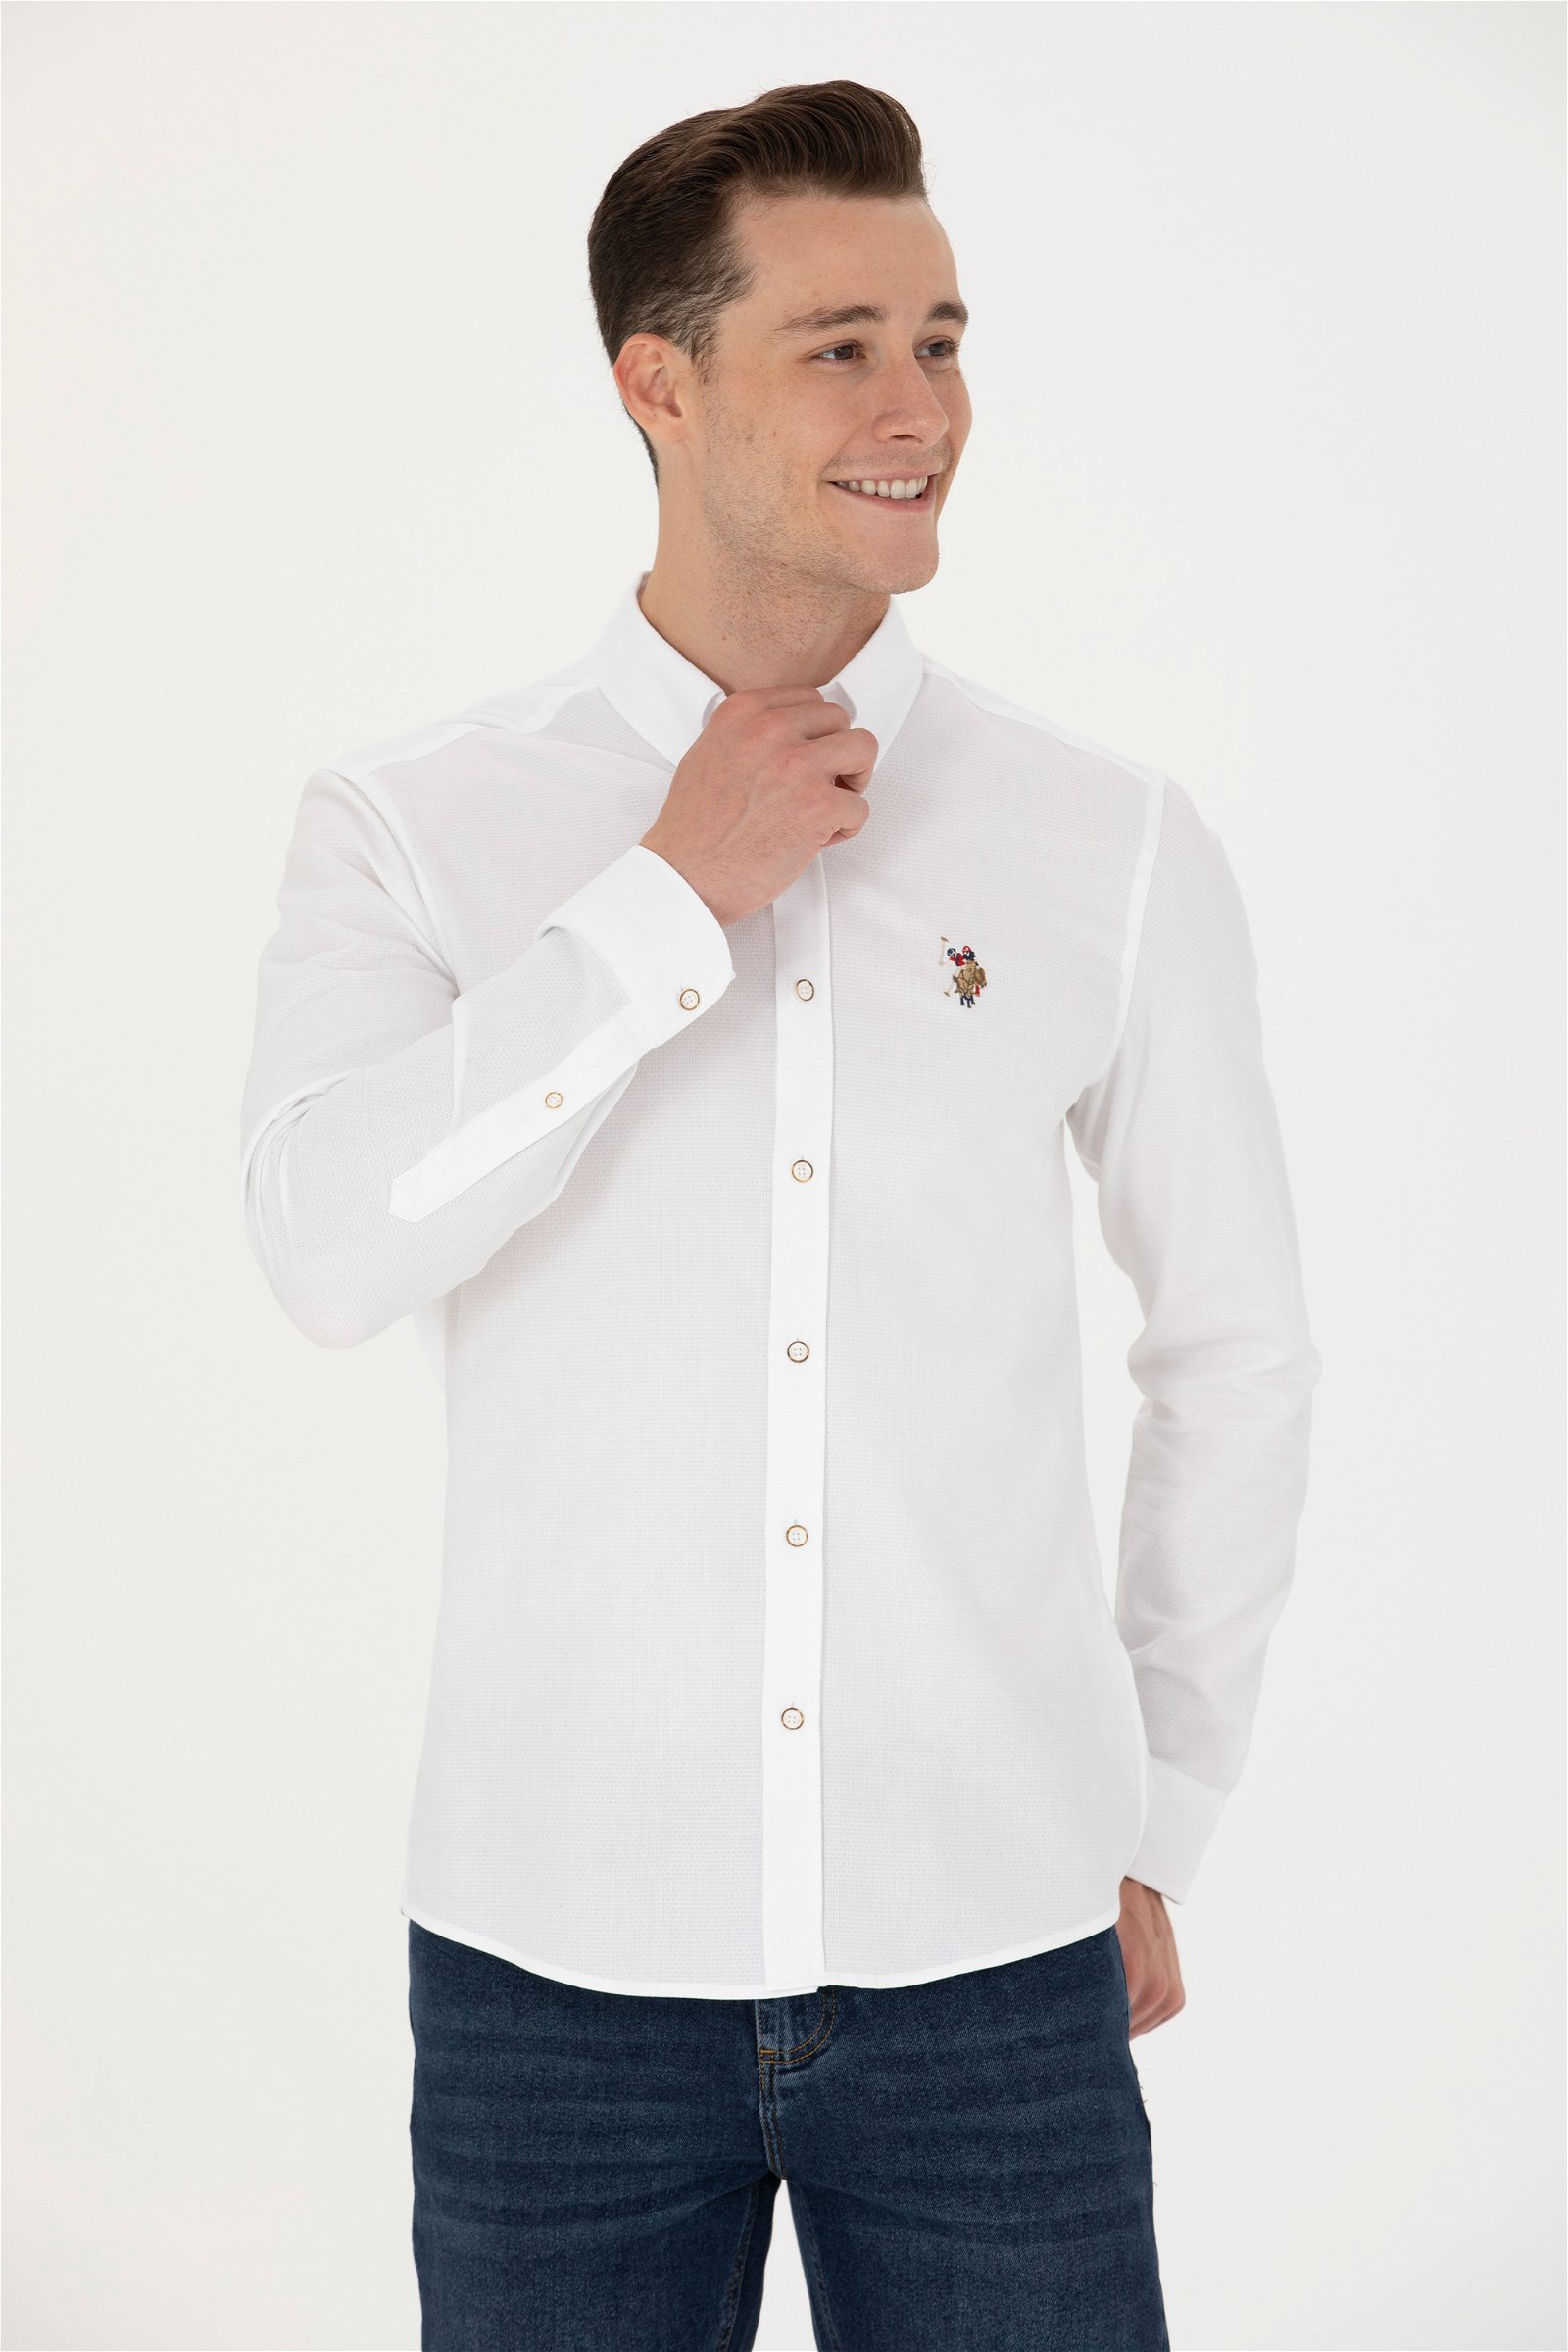 پیراهن  سفید  اندامی  مردانه یو اس پولو | US POLO ASSN